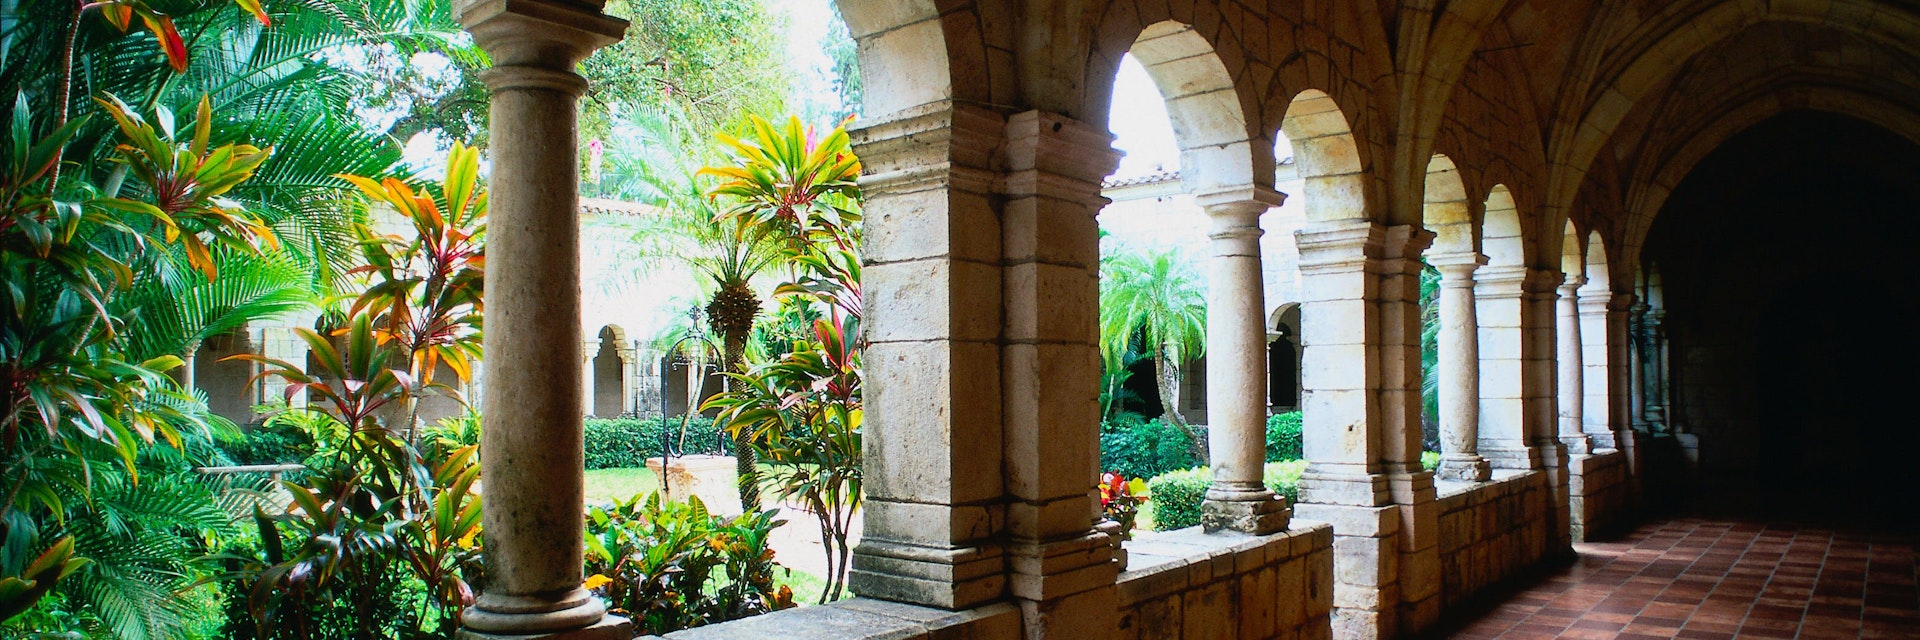 Ancient Spanish Monastery - Miami, Florida